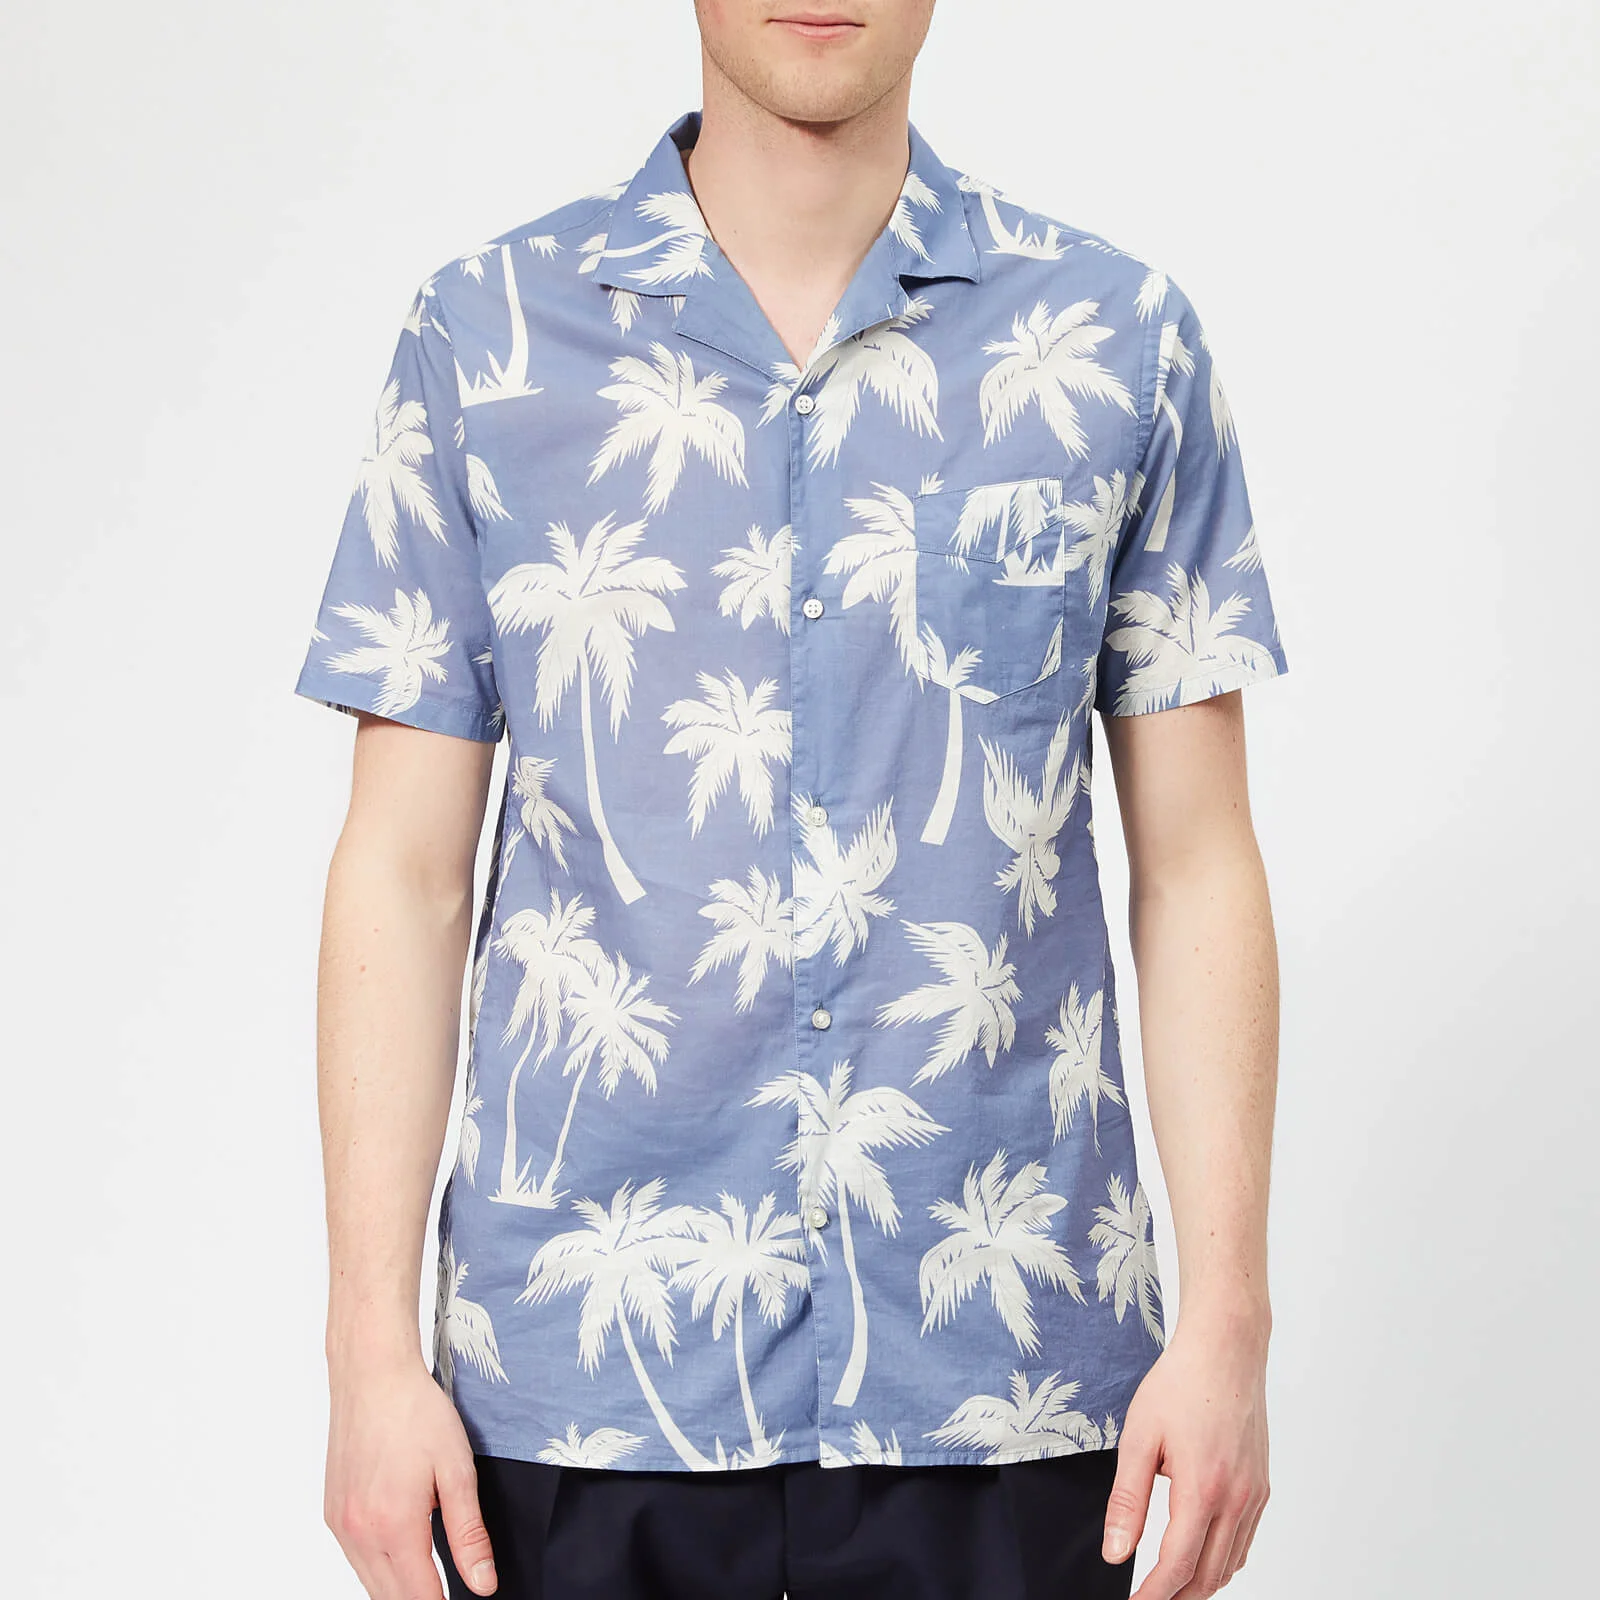 Officine Générale Men's Dario Palm Print Shirt - Indigo/White Image 1